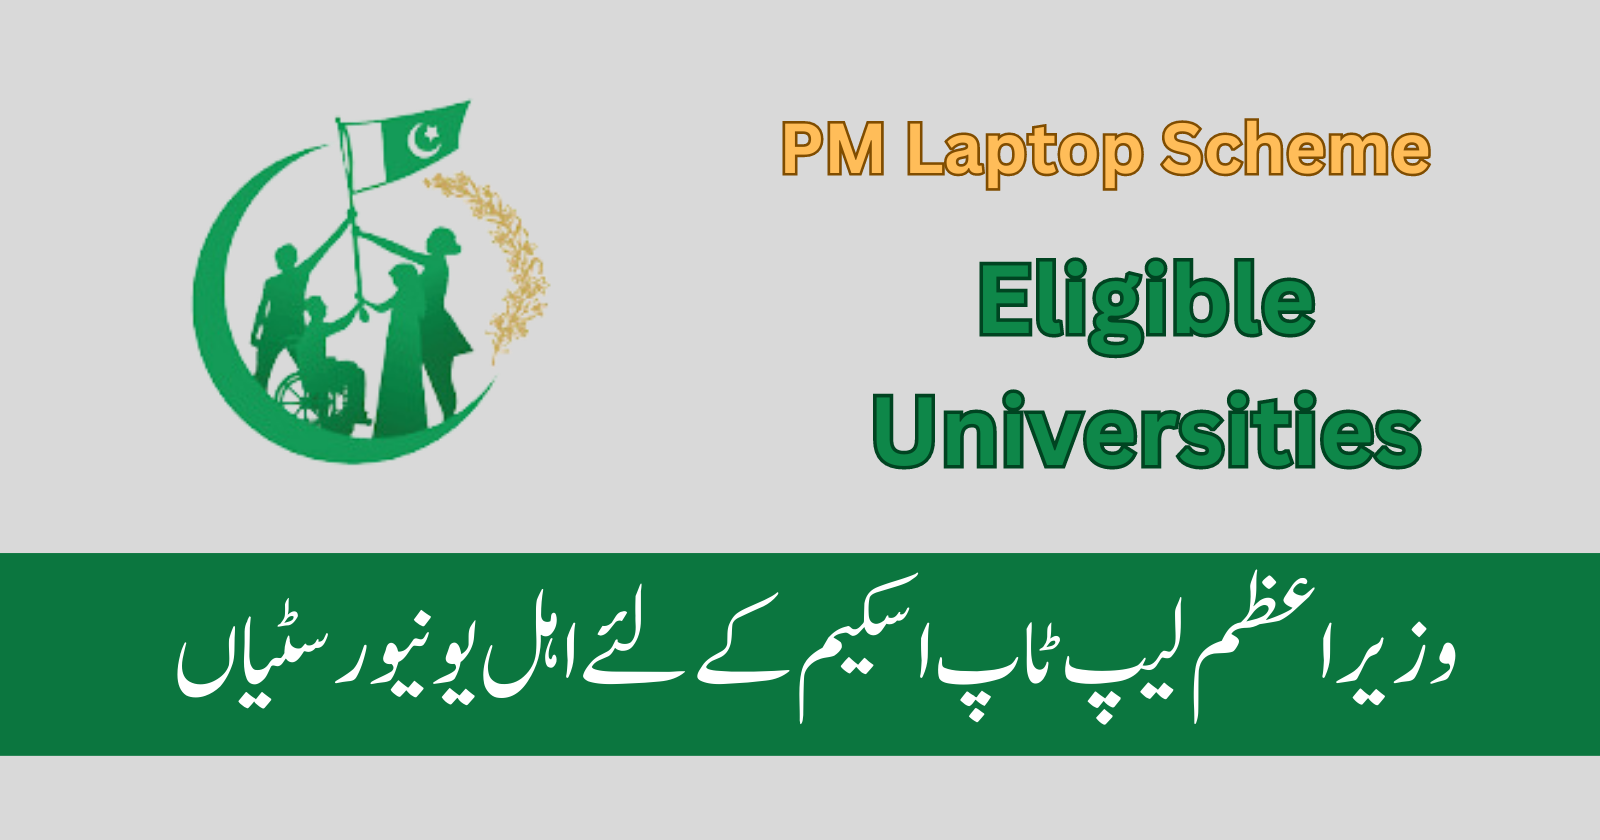 Eligible Universities For PM Laptop Scheme New Registration